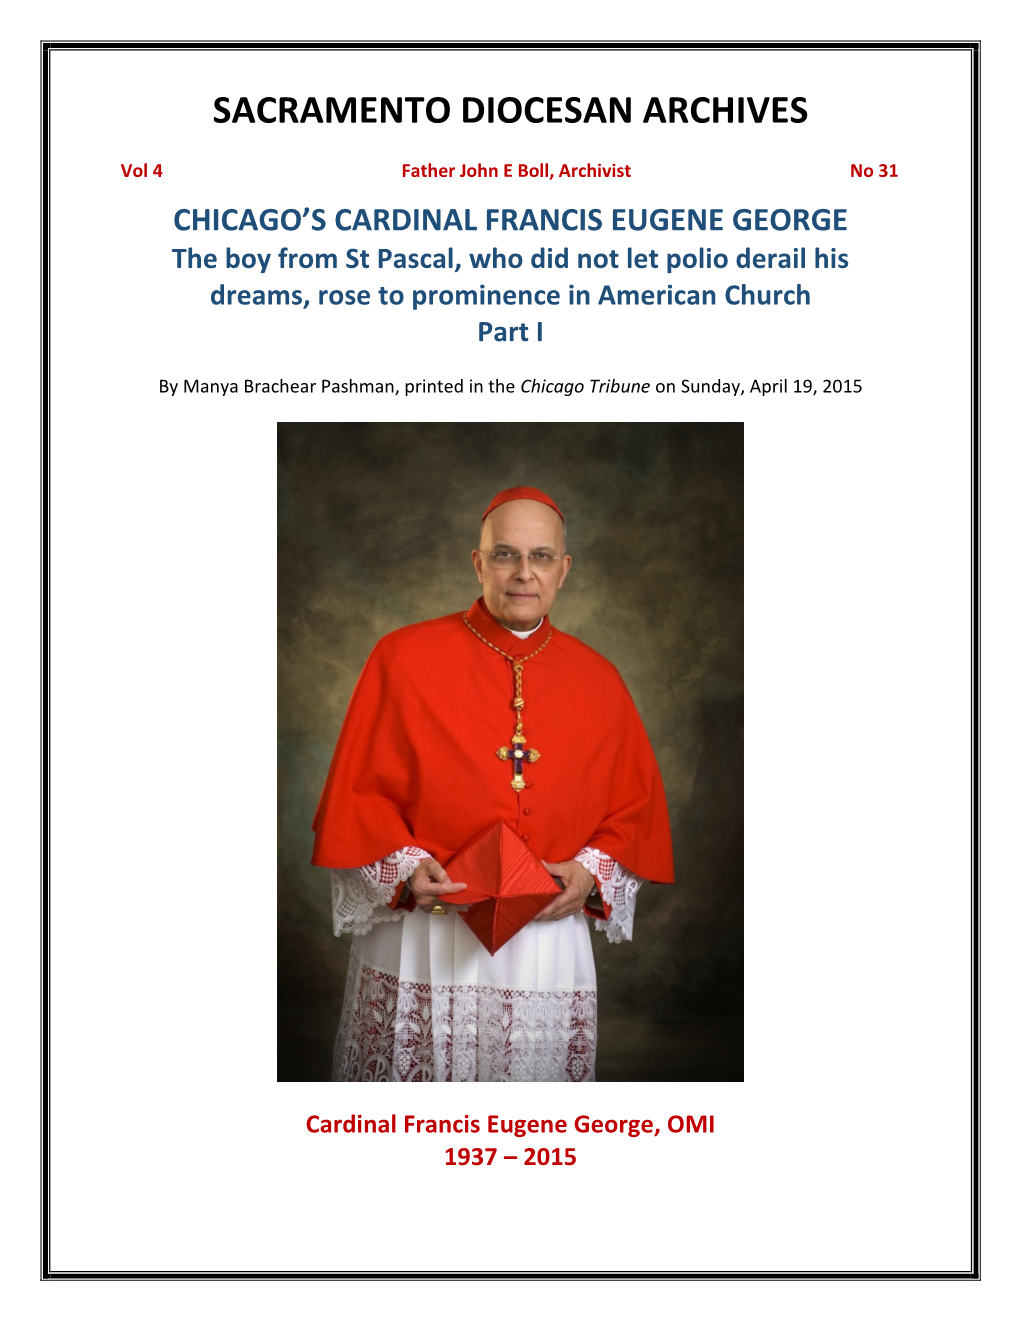 Chicago's Cardinal Francis Eugene George